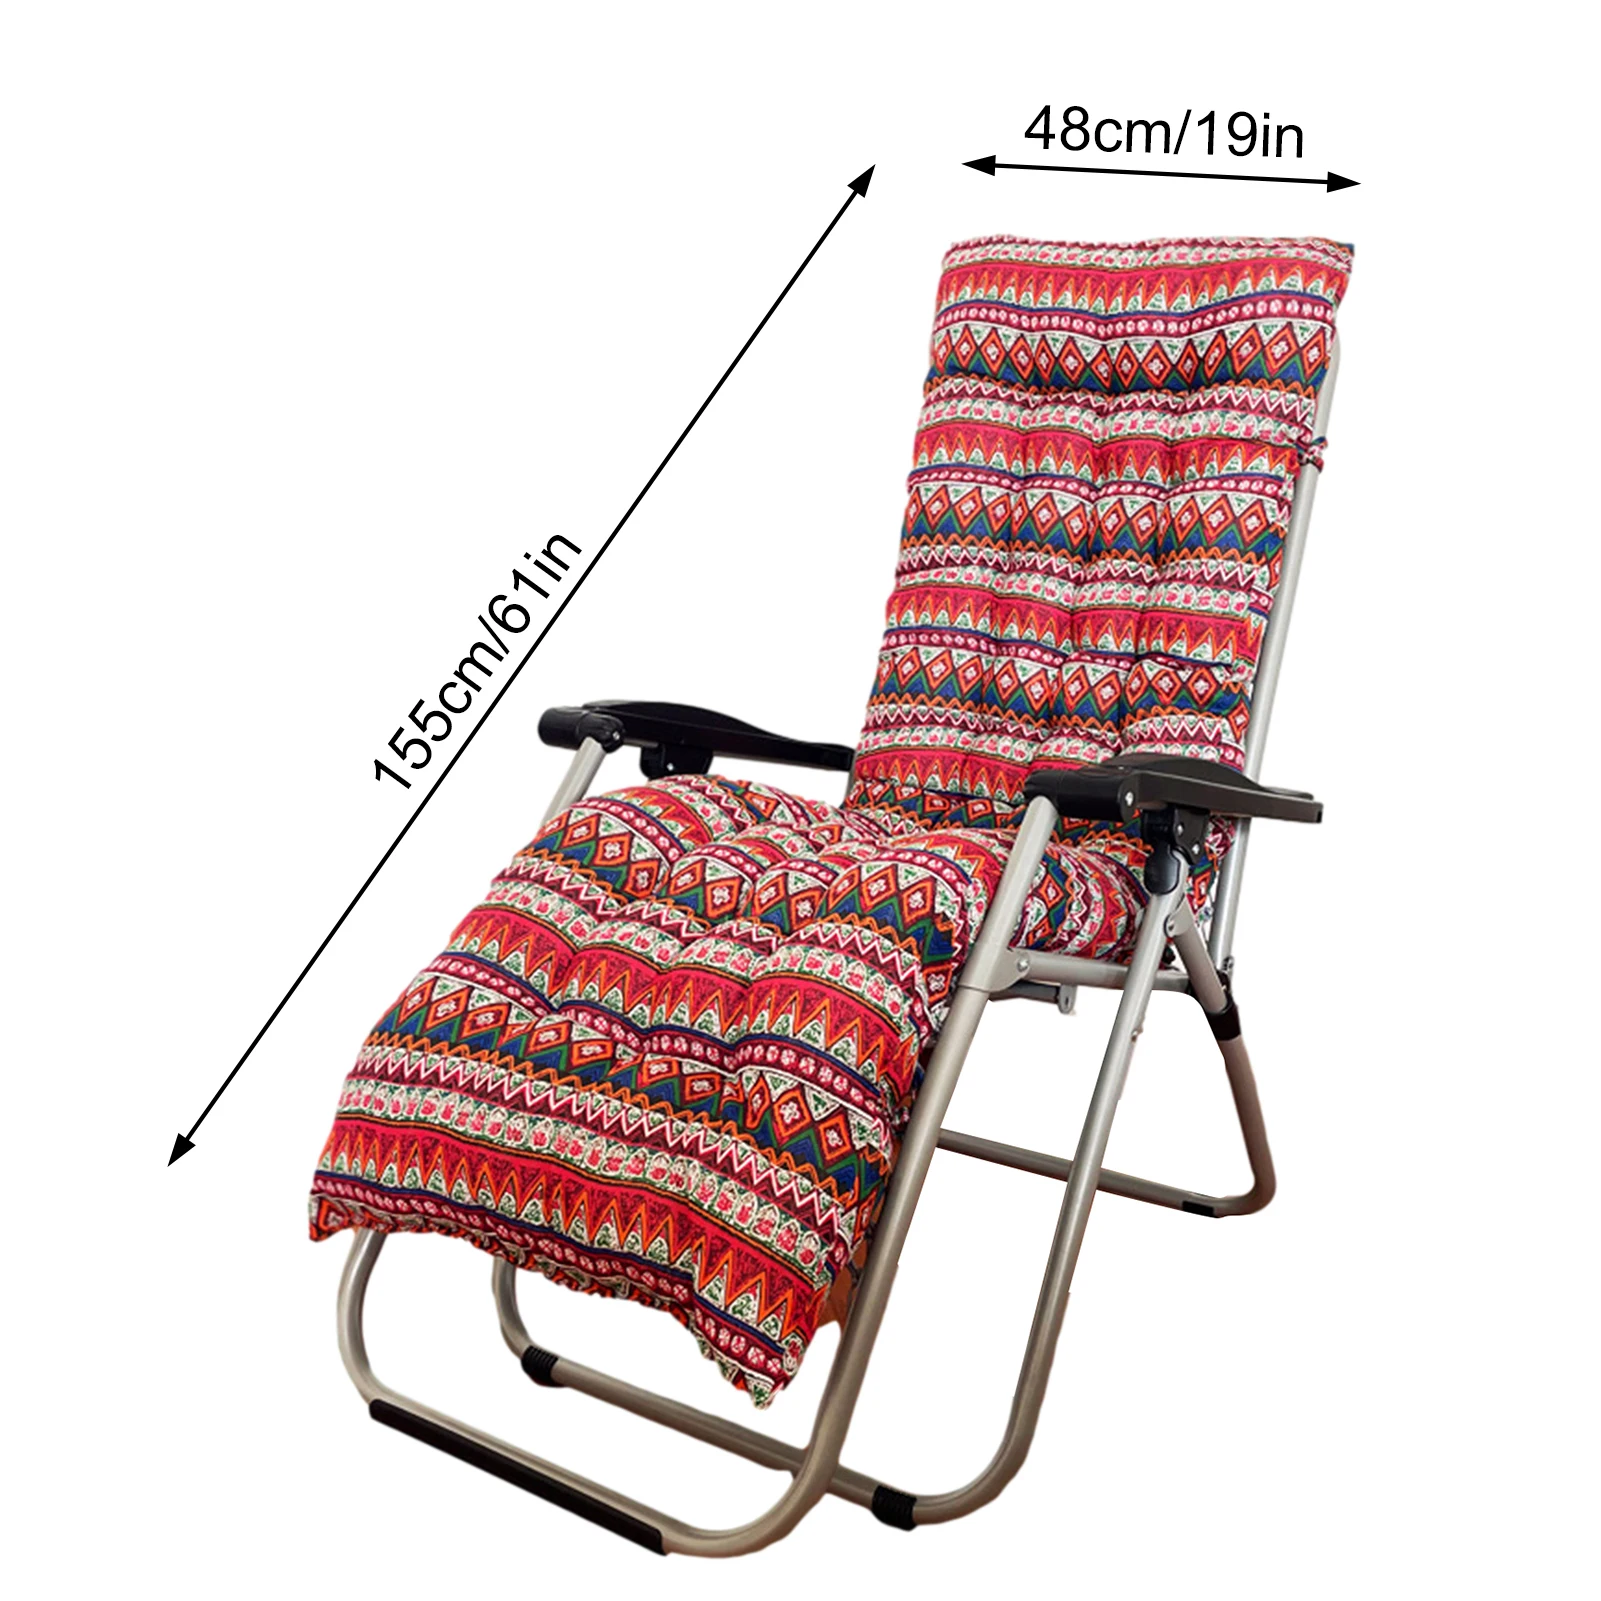 https://ae01.alicdn.com/kf/Ha9505a3c3c534a8a90282a95cc5b79a68/Outdoor-Chaise-Lounger-Cushion-Rocking-Chair-Mat-Flax-Print-Thickened-Soft-Long-Folding-Lazy-Cushion-Garden.jpg